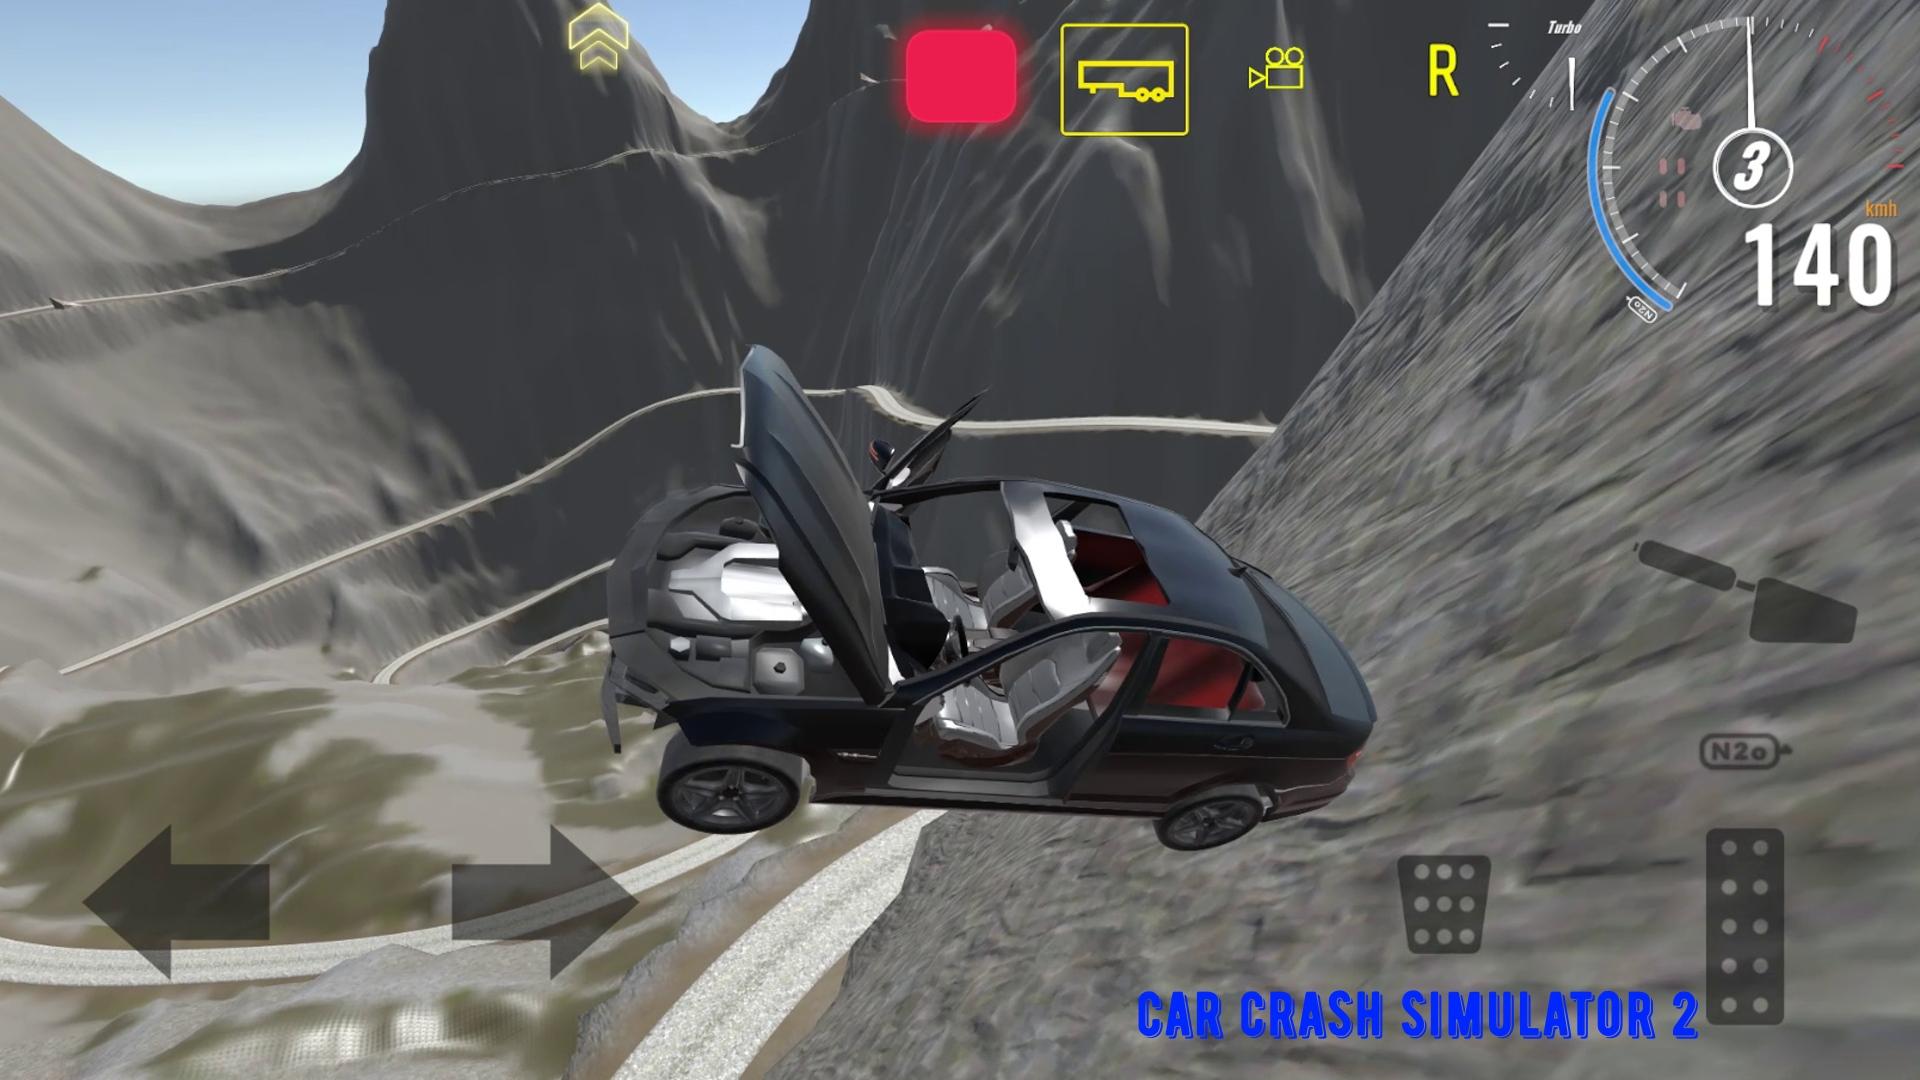 Deforming crash 2. Включи видео симулятор про краш тест автомобиля.